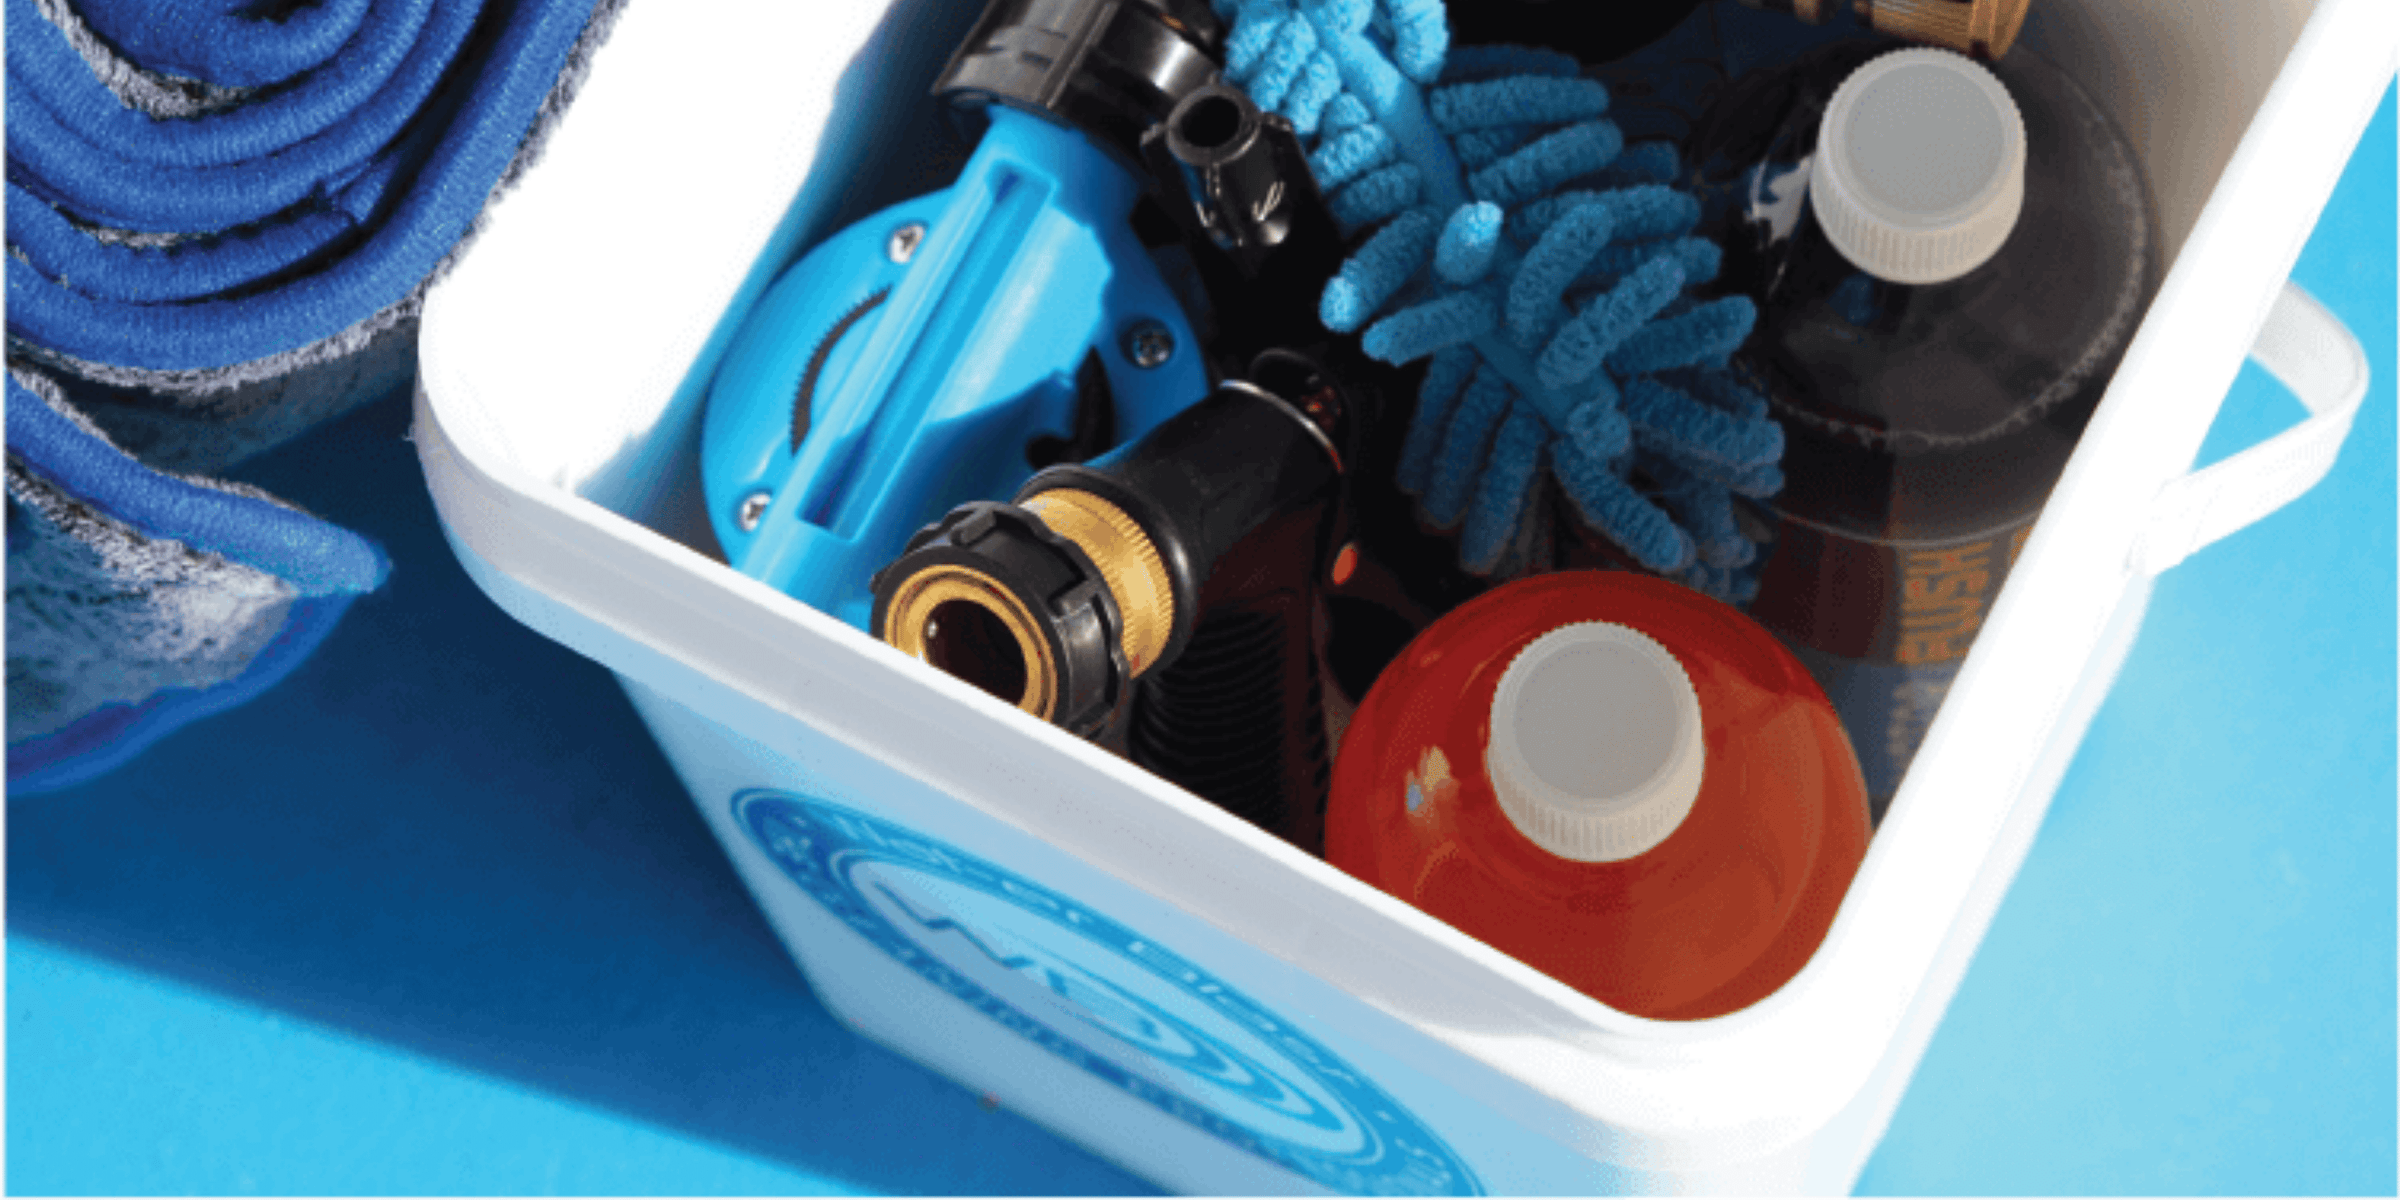 Products Inside Marine Bucket